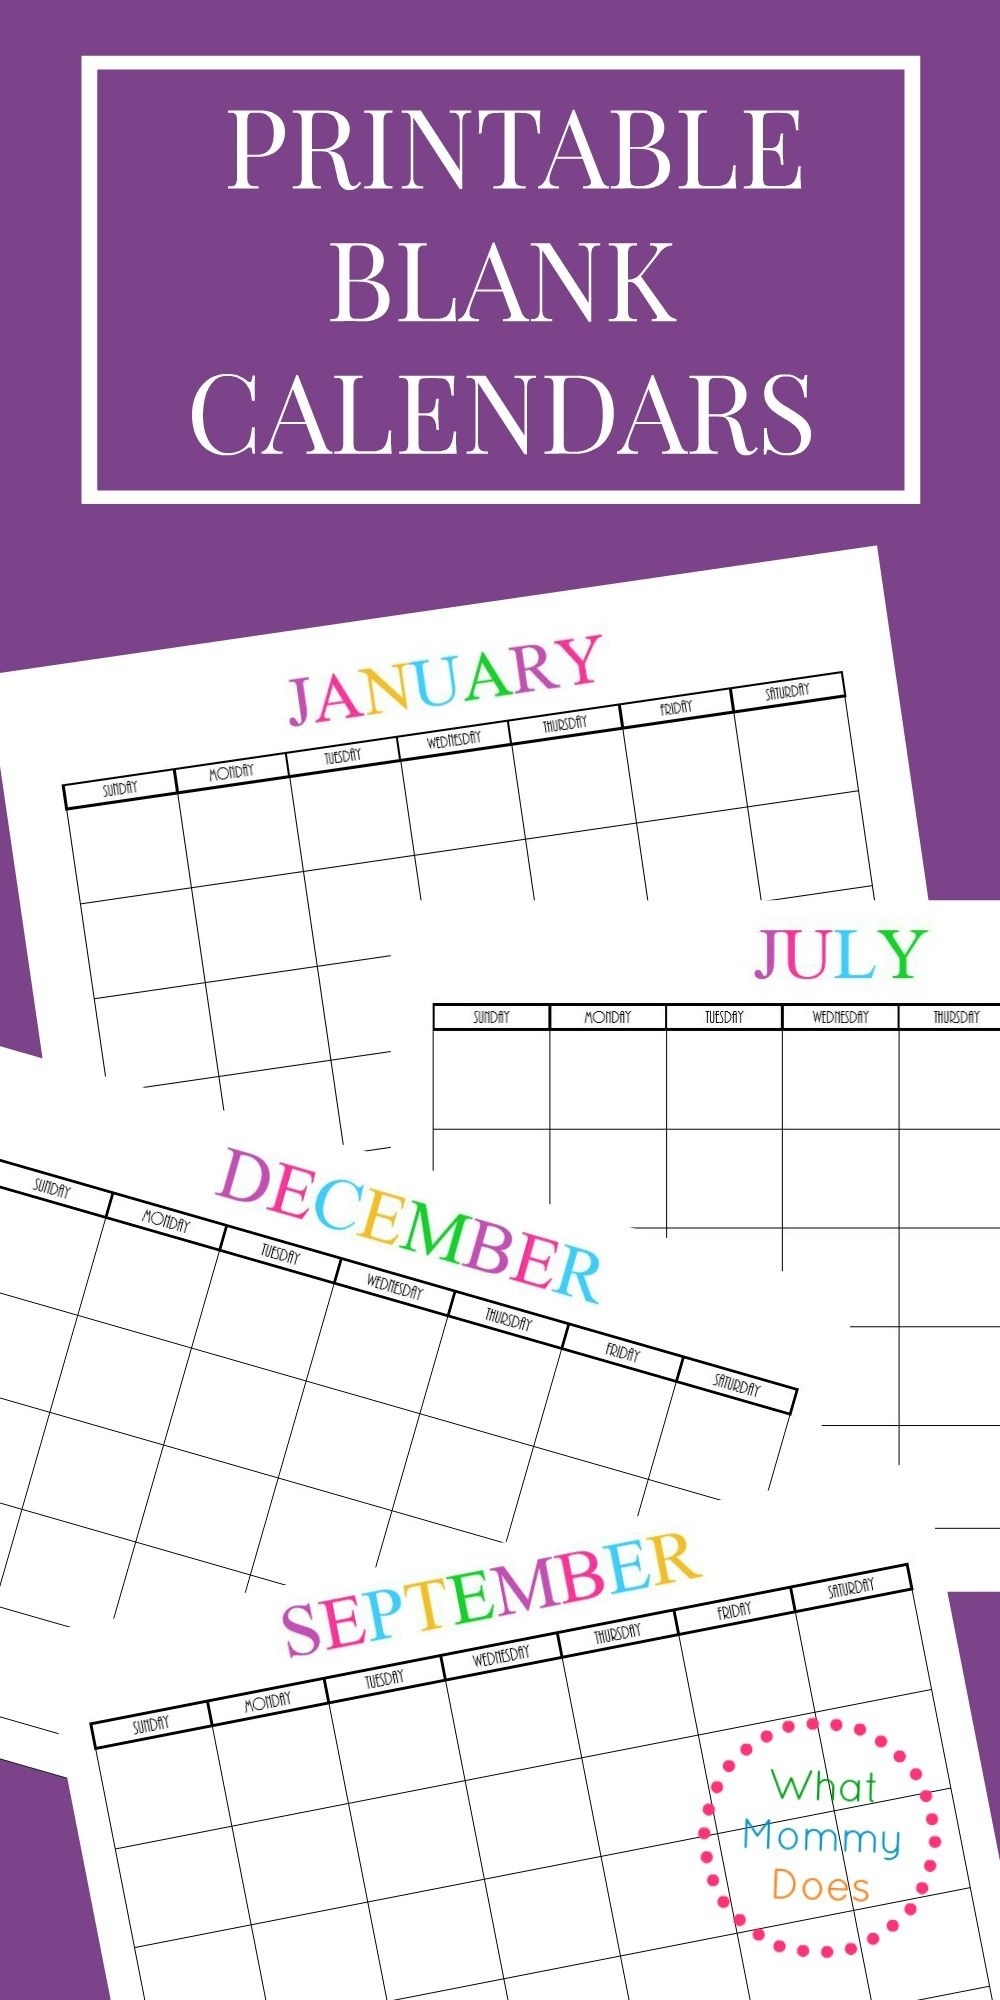 Free Printable Blank Monthly Calendars – 2020, 2021, 2022